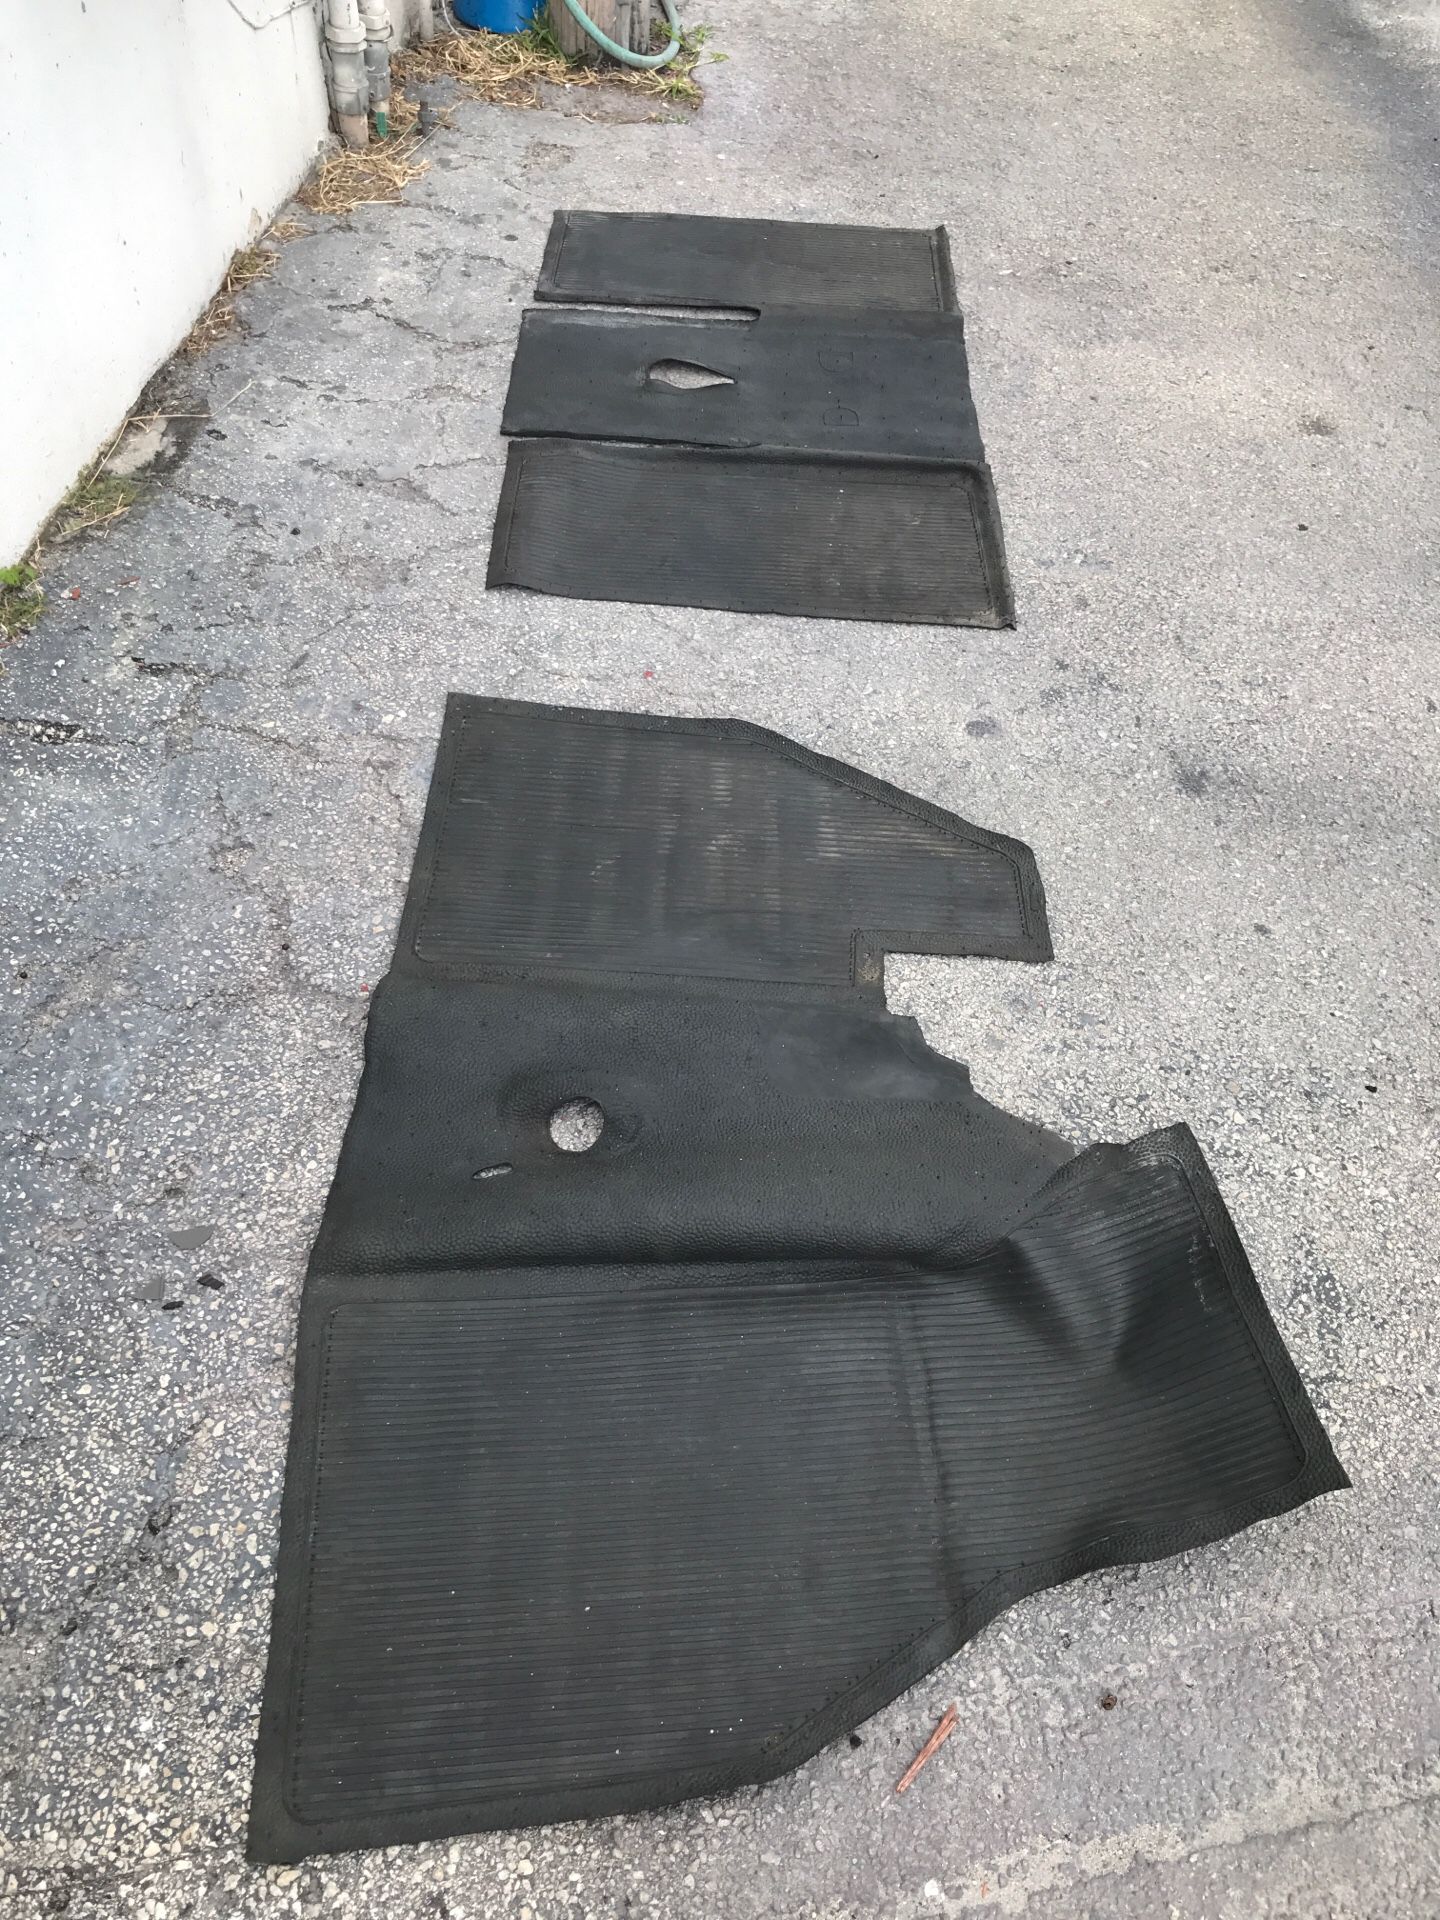 Vw beetle rubber mats 1960 to 1964 black